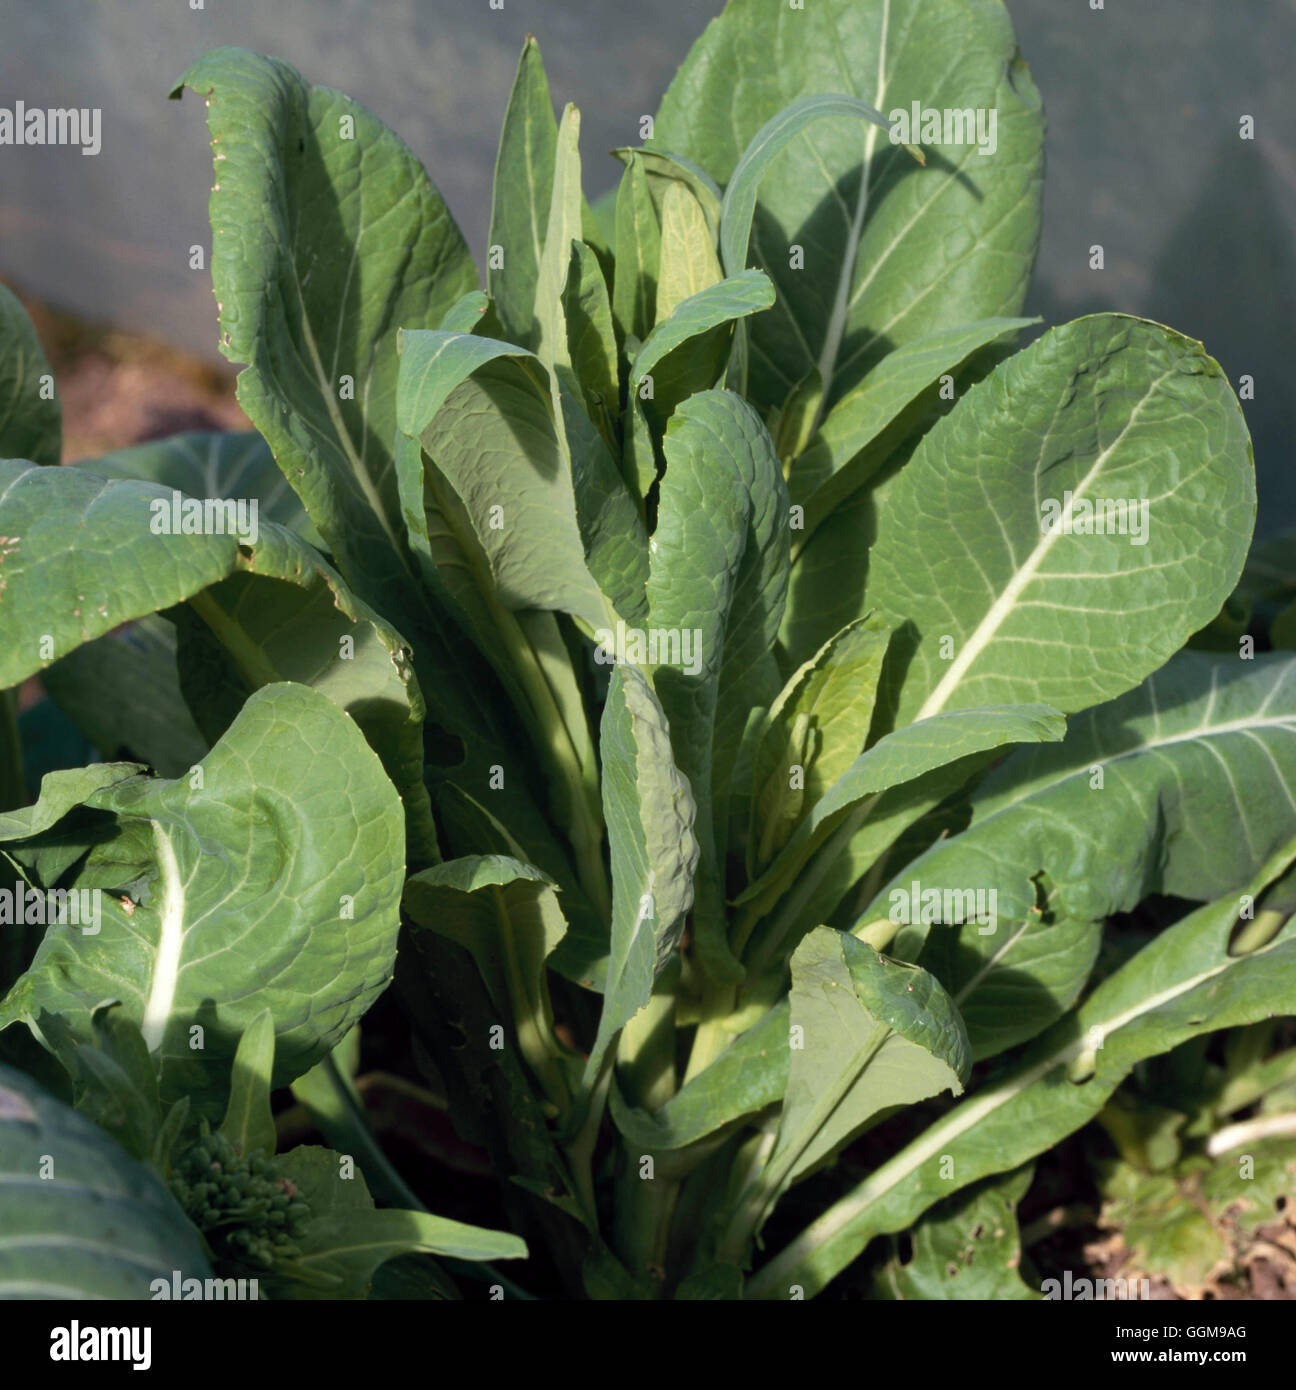 Verdure orientali - Komatsuna/spinaci senape (HDRA - organico)- - (Brassica rapa var. pervidis) VEG Compuls093318 Foto Stock